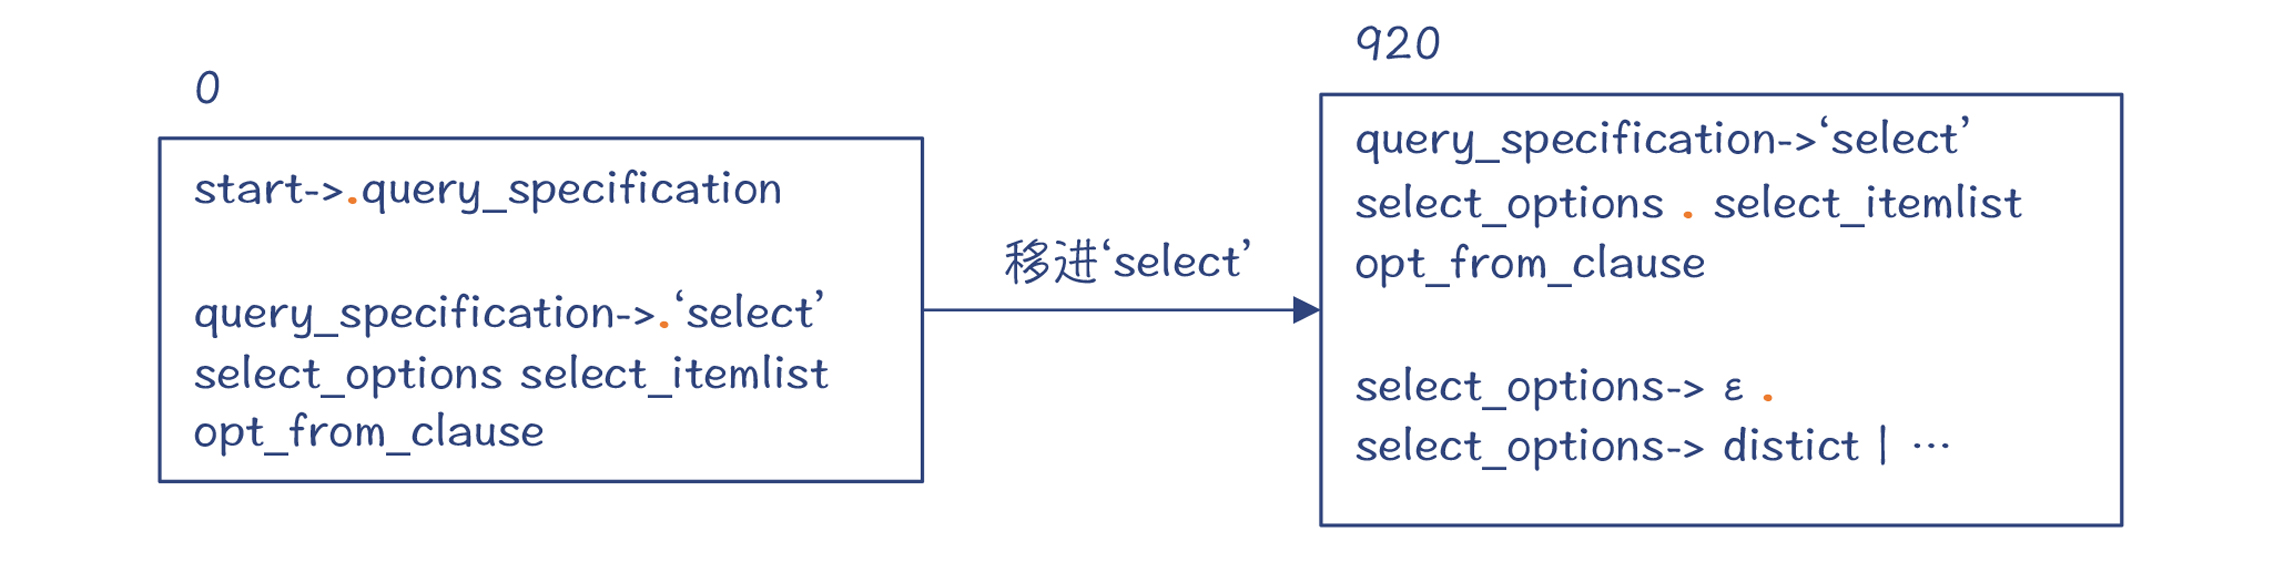 图 8：基于“select_options->ε”规约后的 DFA